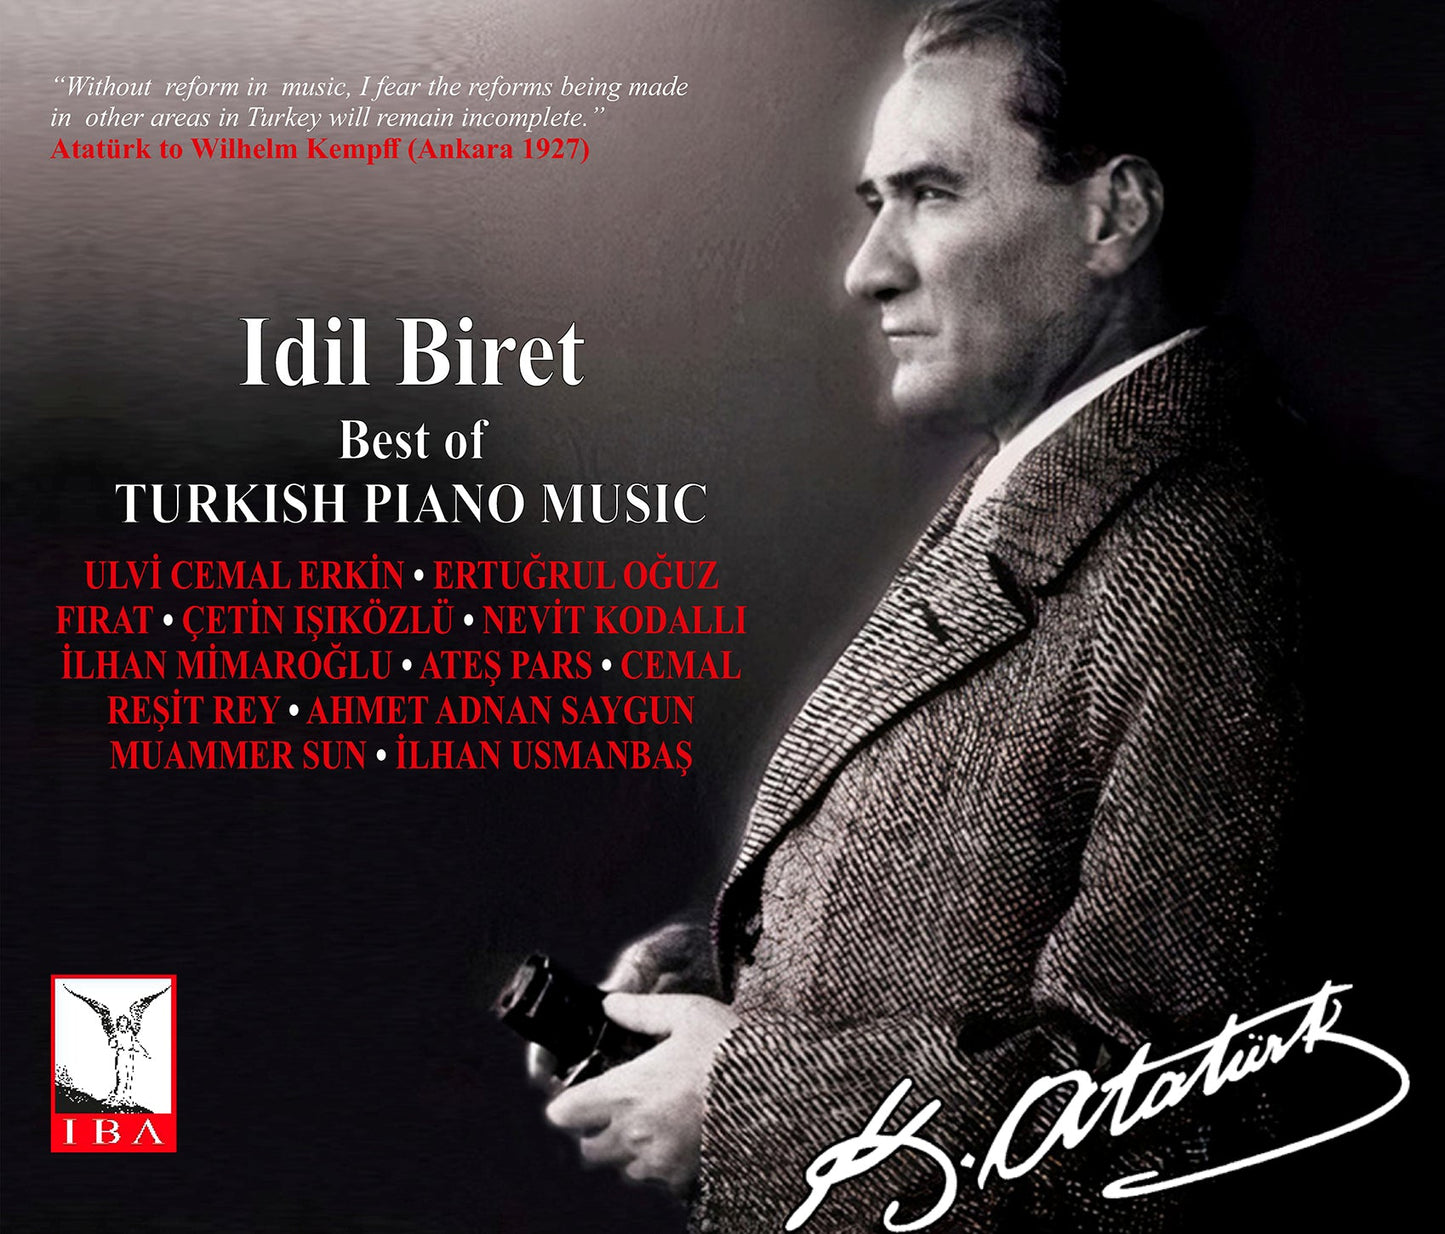 The Best Of Turkish Piano Music